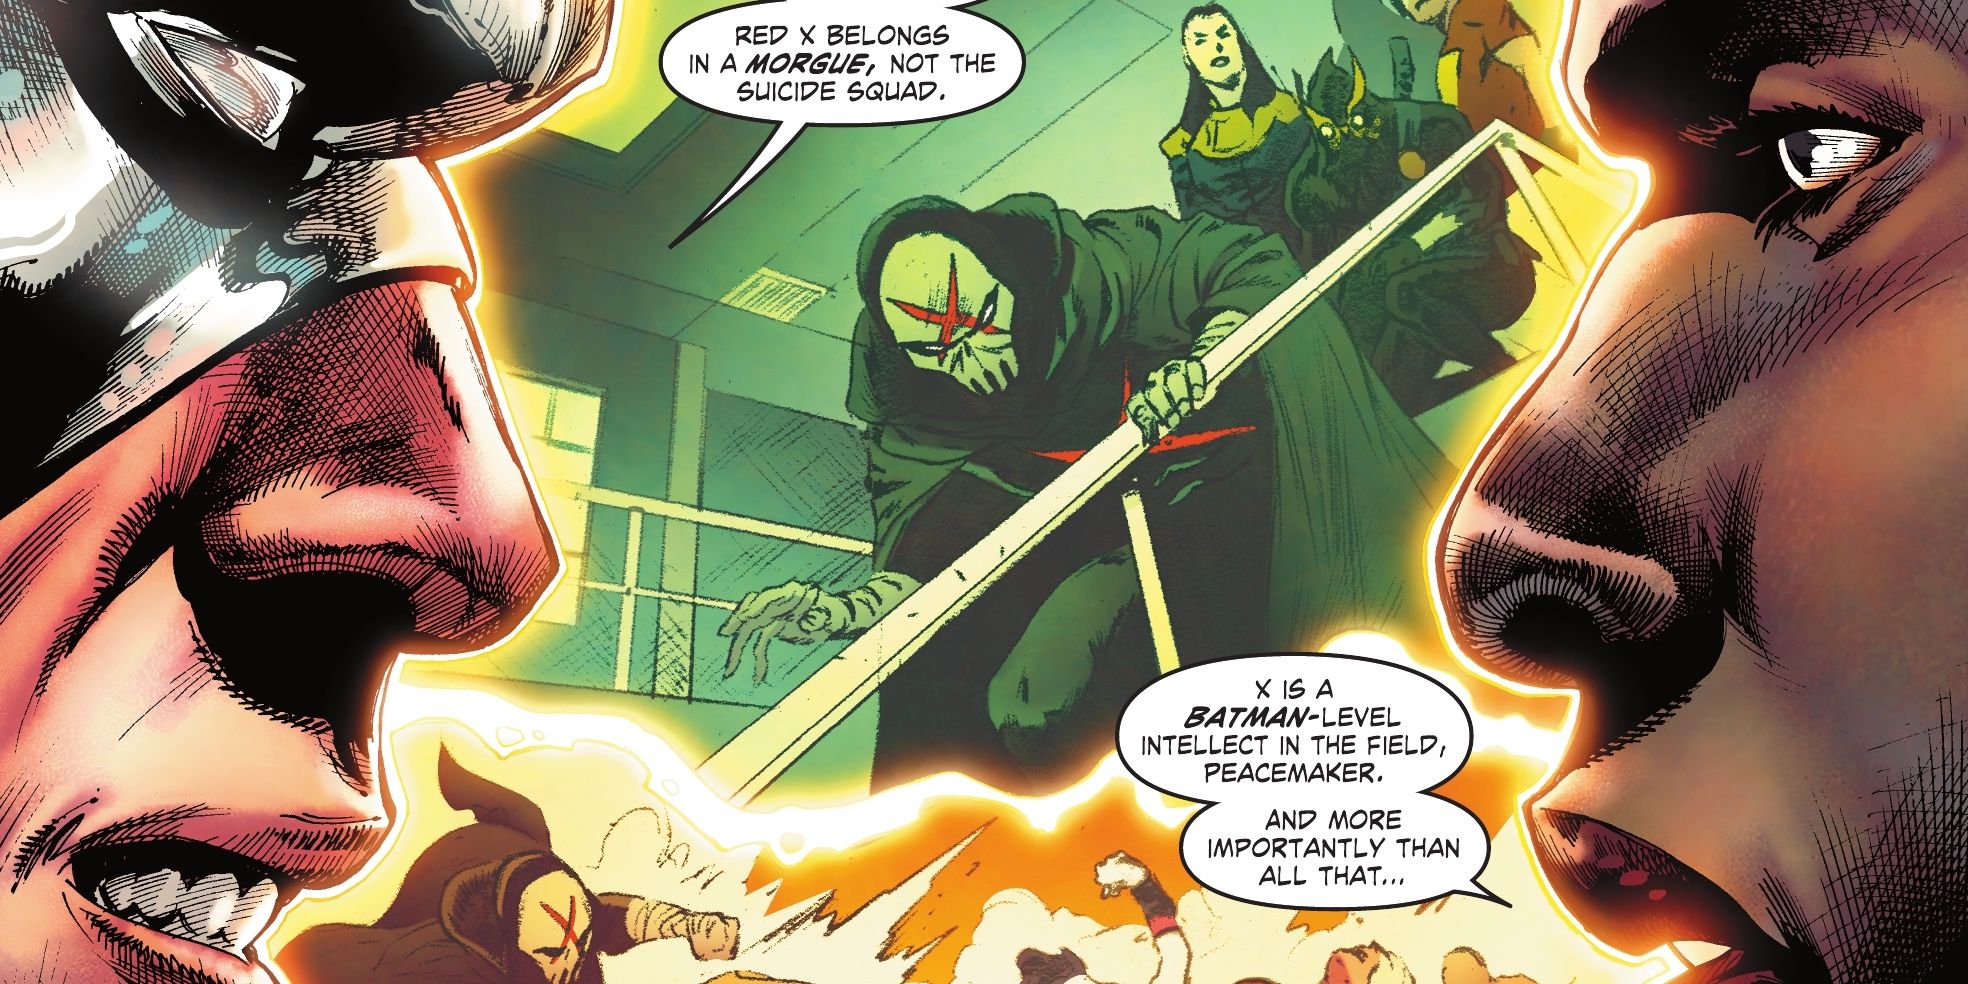 Suicide Squad Confirms Red X is a Batman-Level Threat